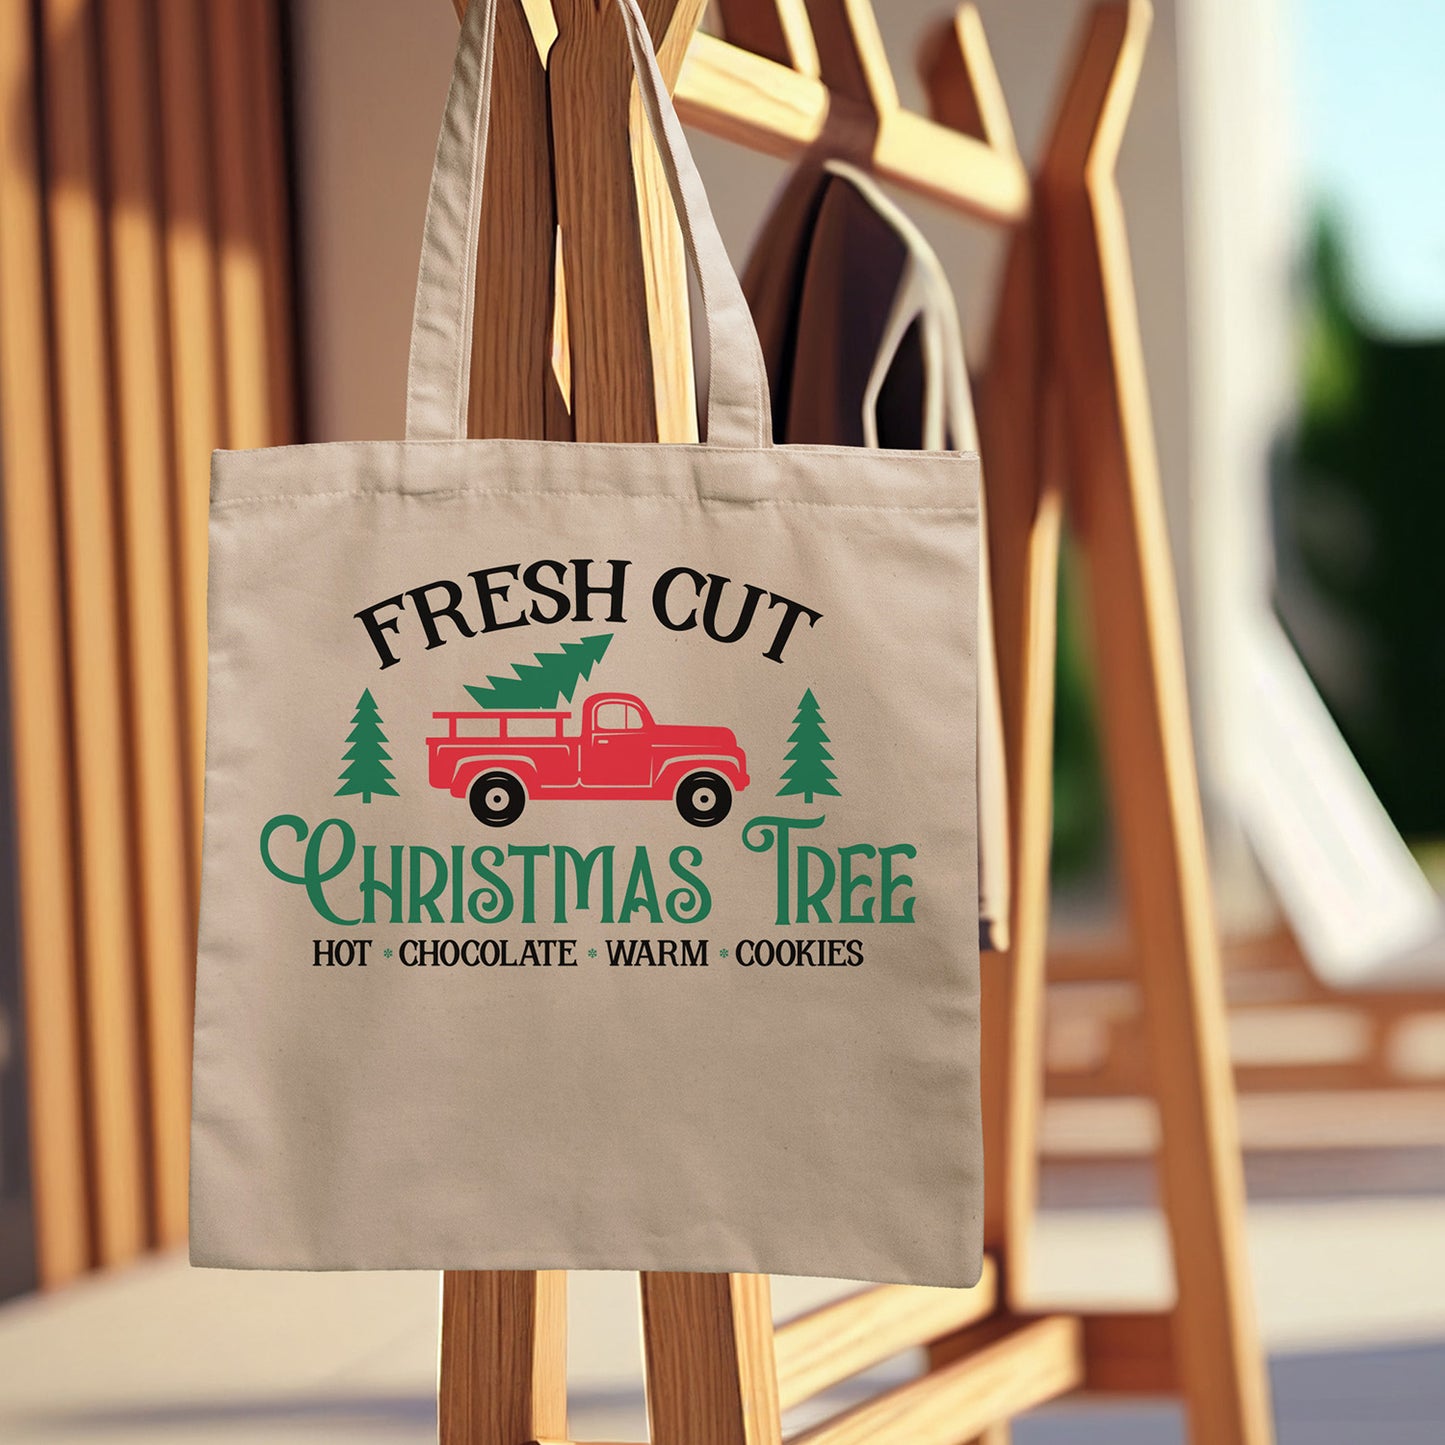 "Fresh Cut Christmas Tree Hot Chocolate Warm Cookies" Graphic